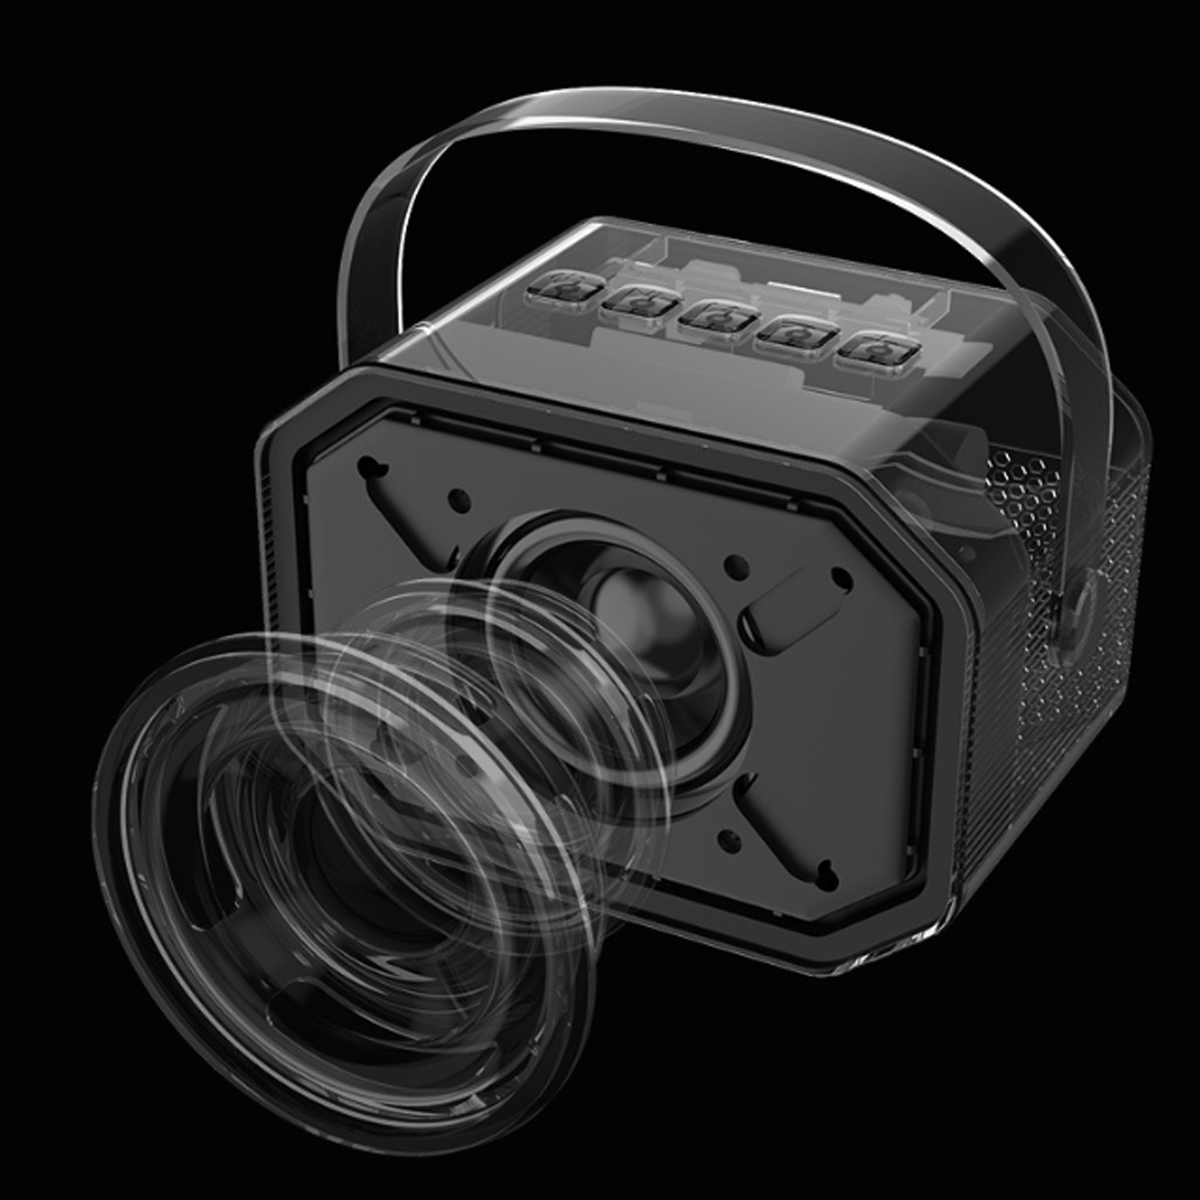 Intelligente Bluetooth-Audio Bluetooth-Lautsprecher, Mikrofon, Akkulaufzeit BYTELIKE Geräuschunterdrückung, Rosa mit lange Kabelloses